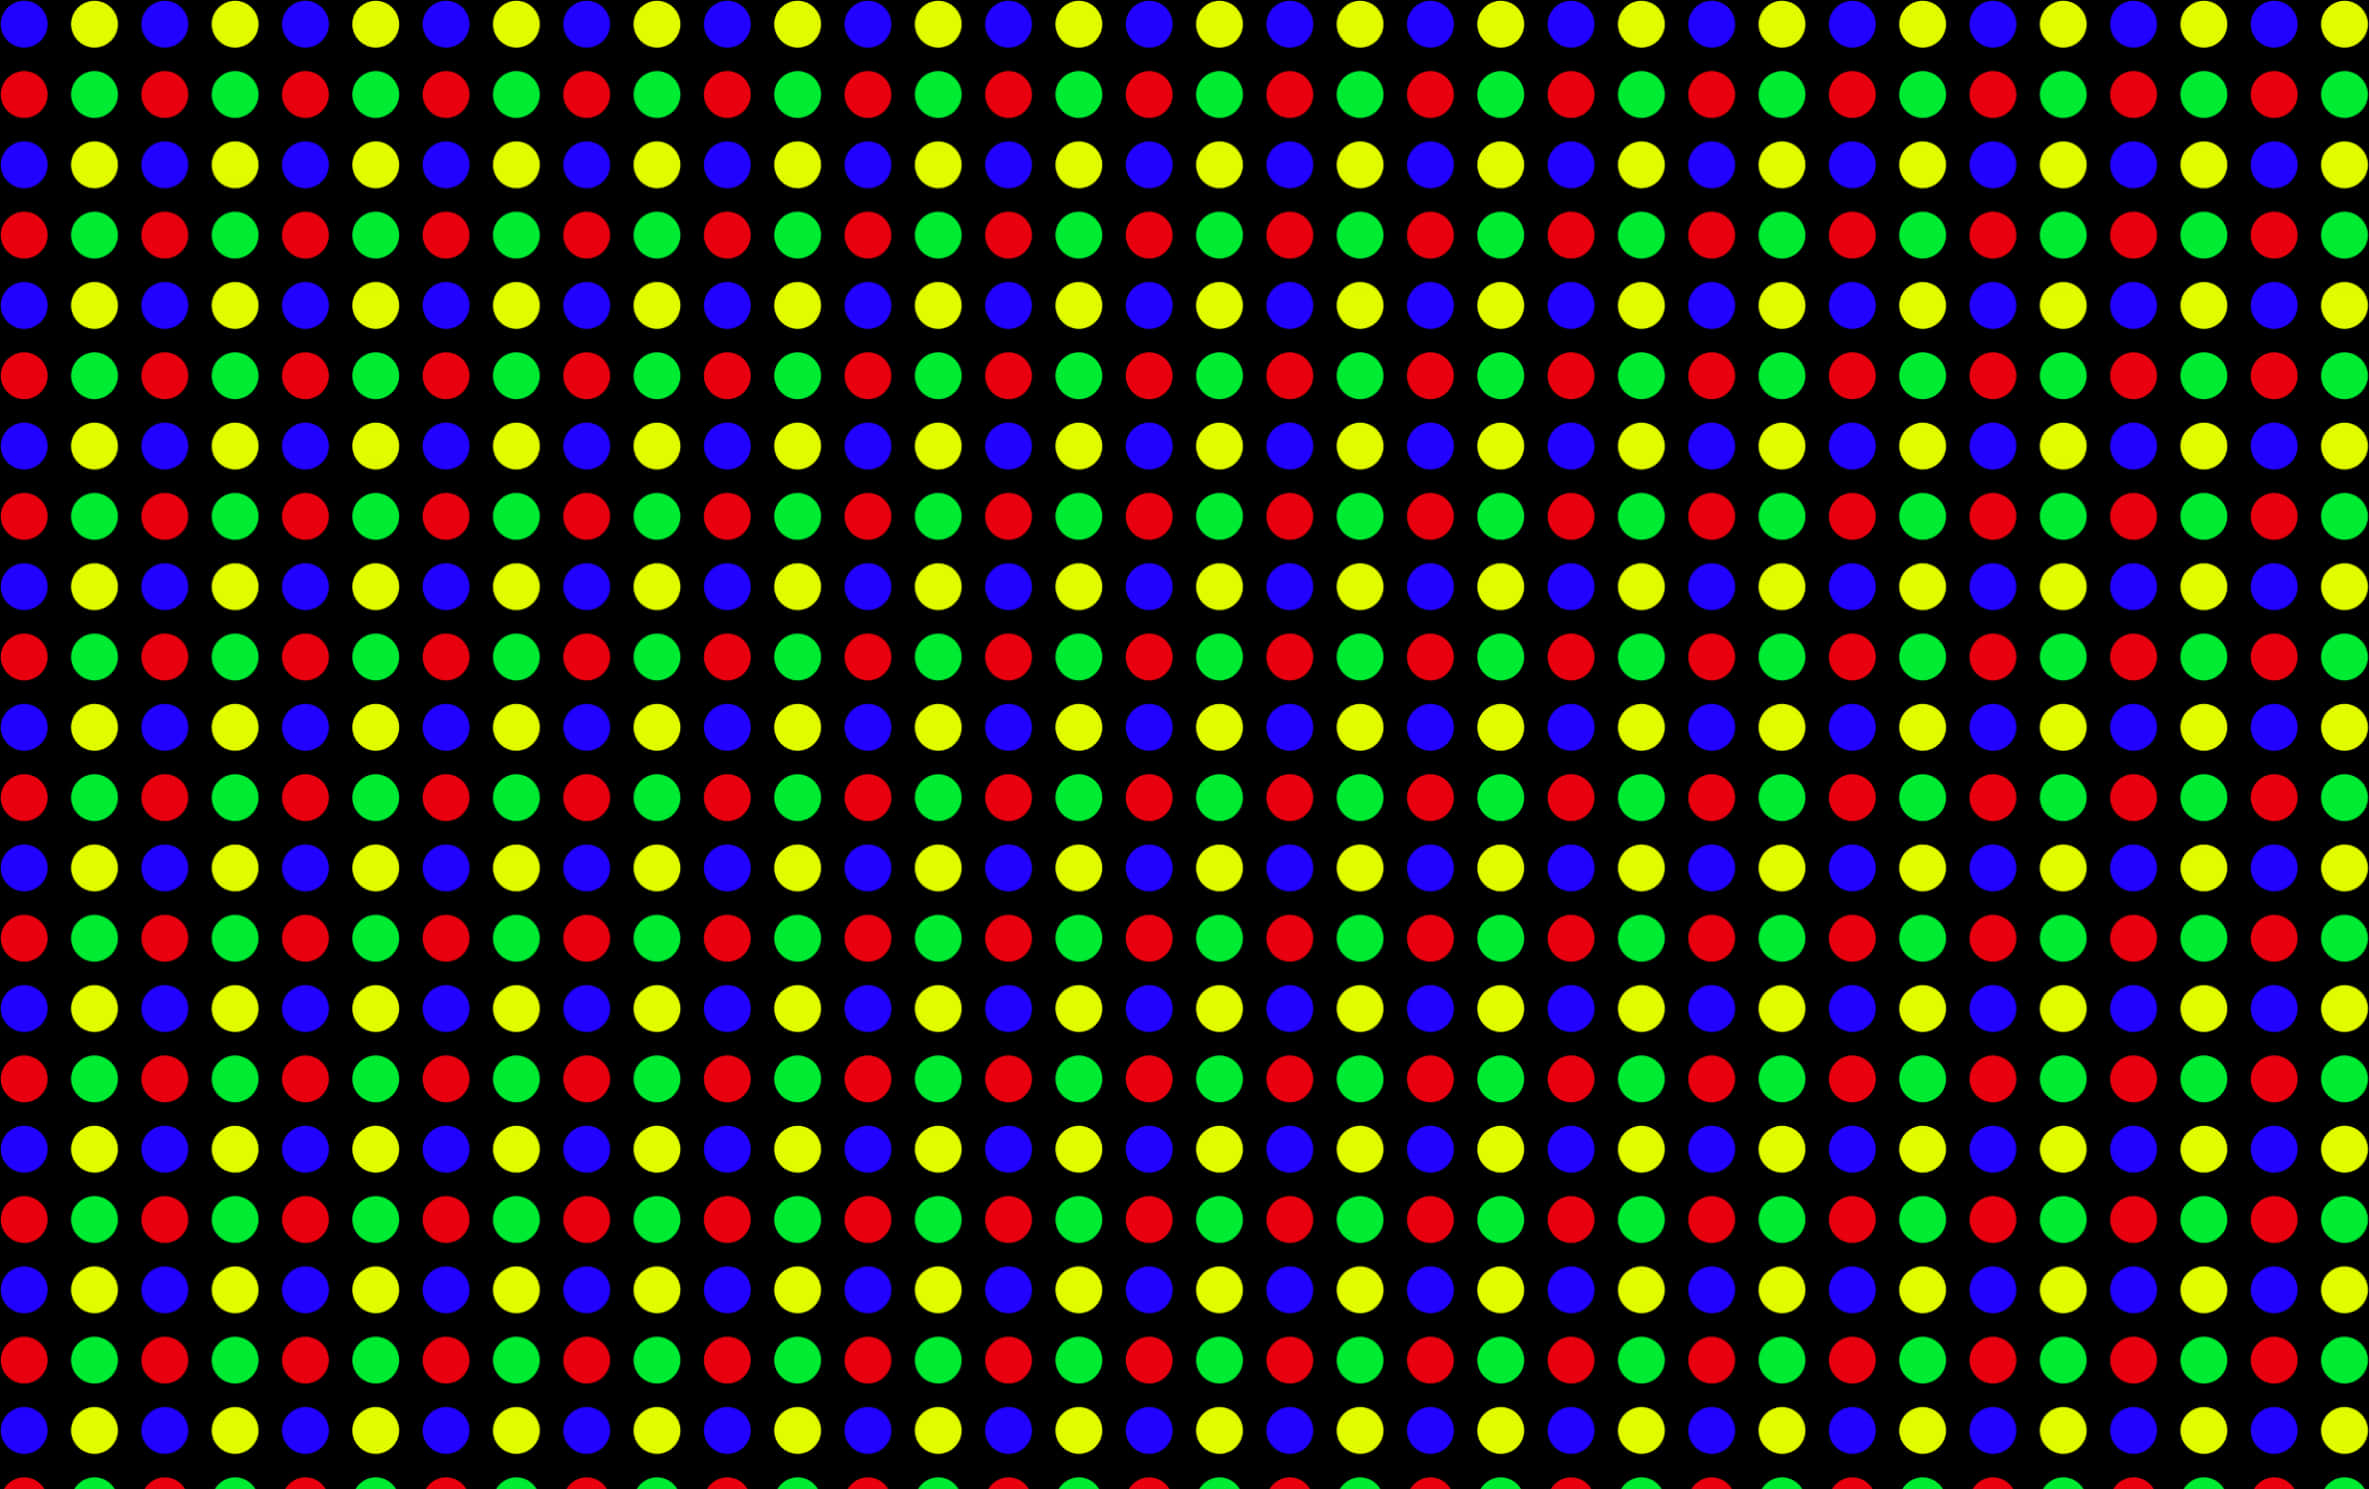 R G B Dot Pattern Texture